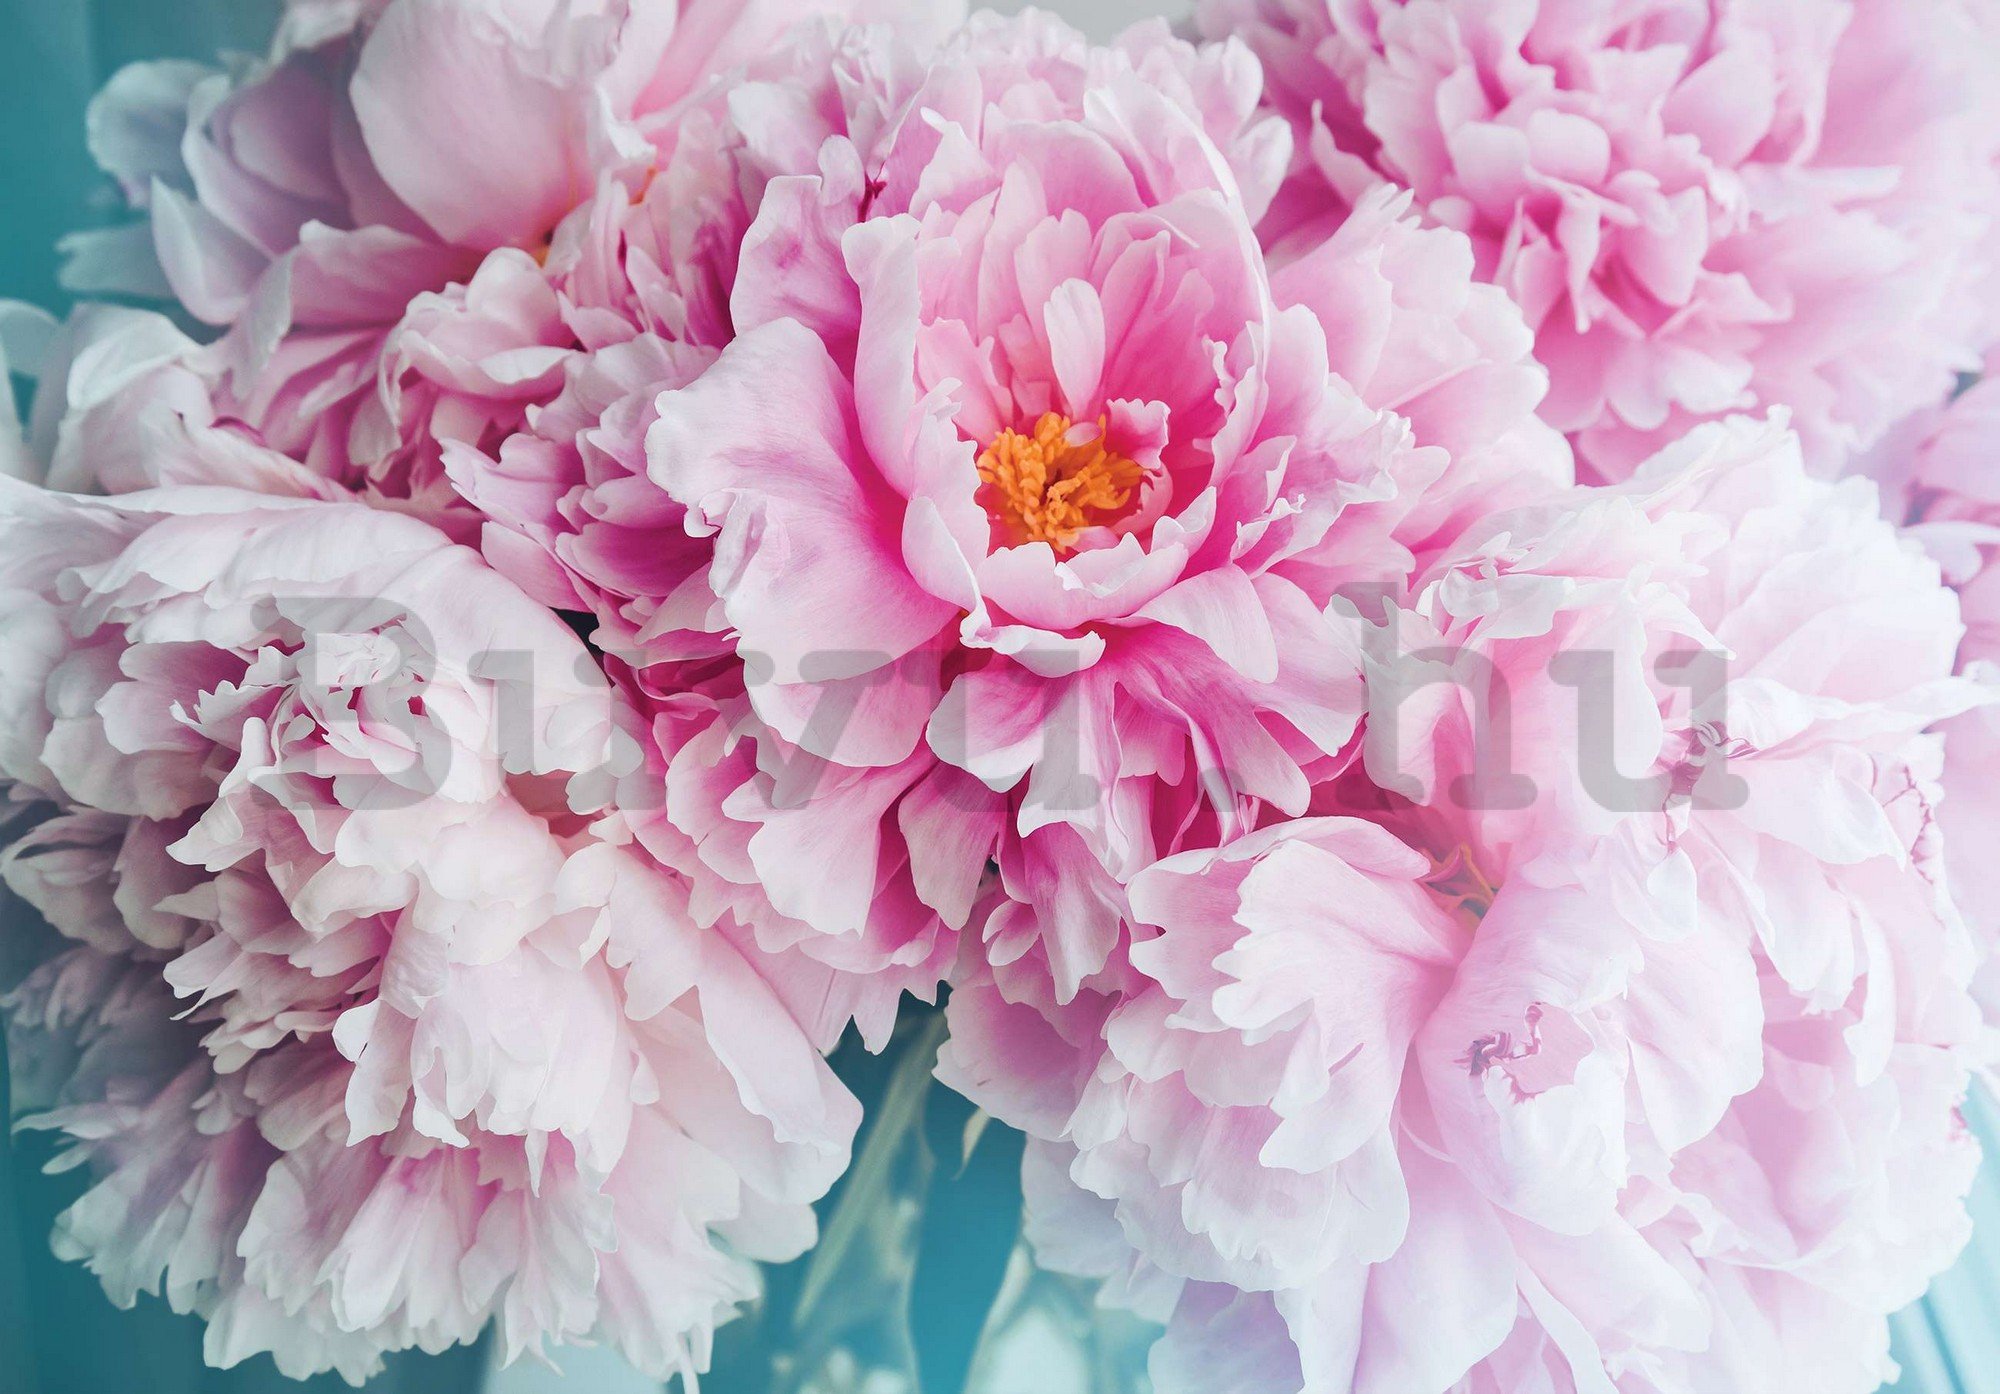 Vlies fotótapéta: Bazsarózsa virág - 416x254 cm